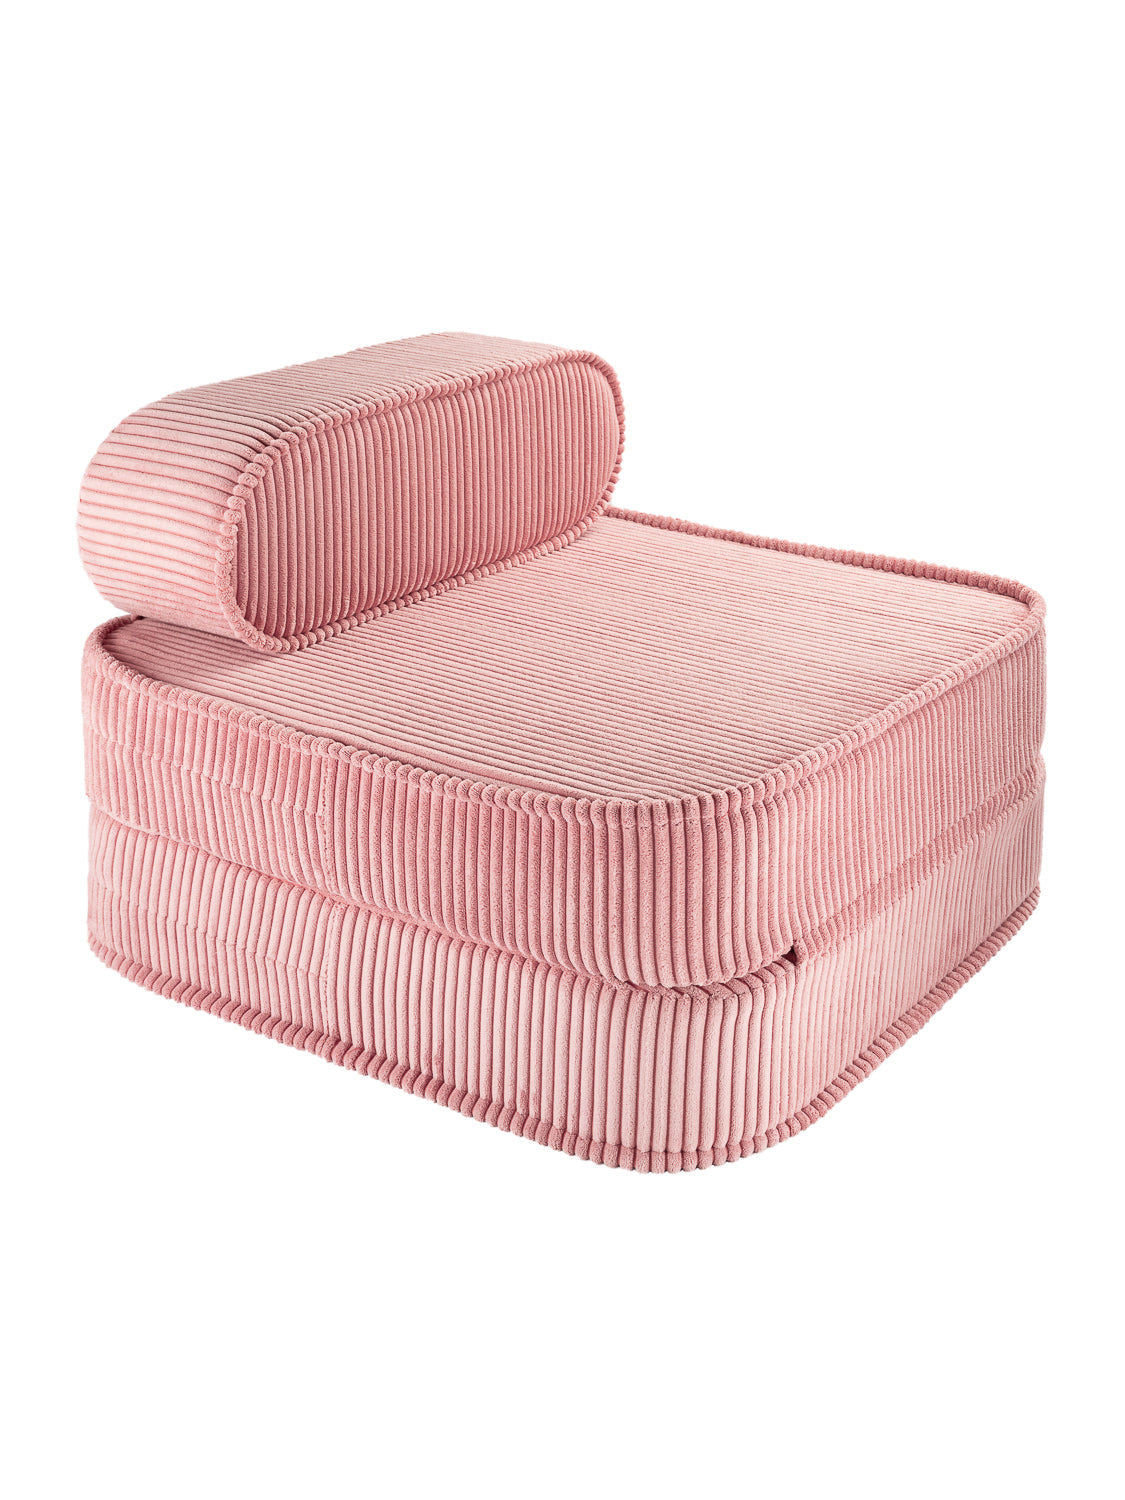 Pink Mousse corduroy folding armchair